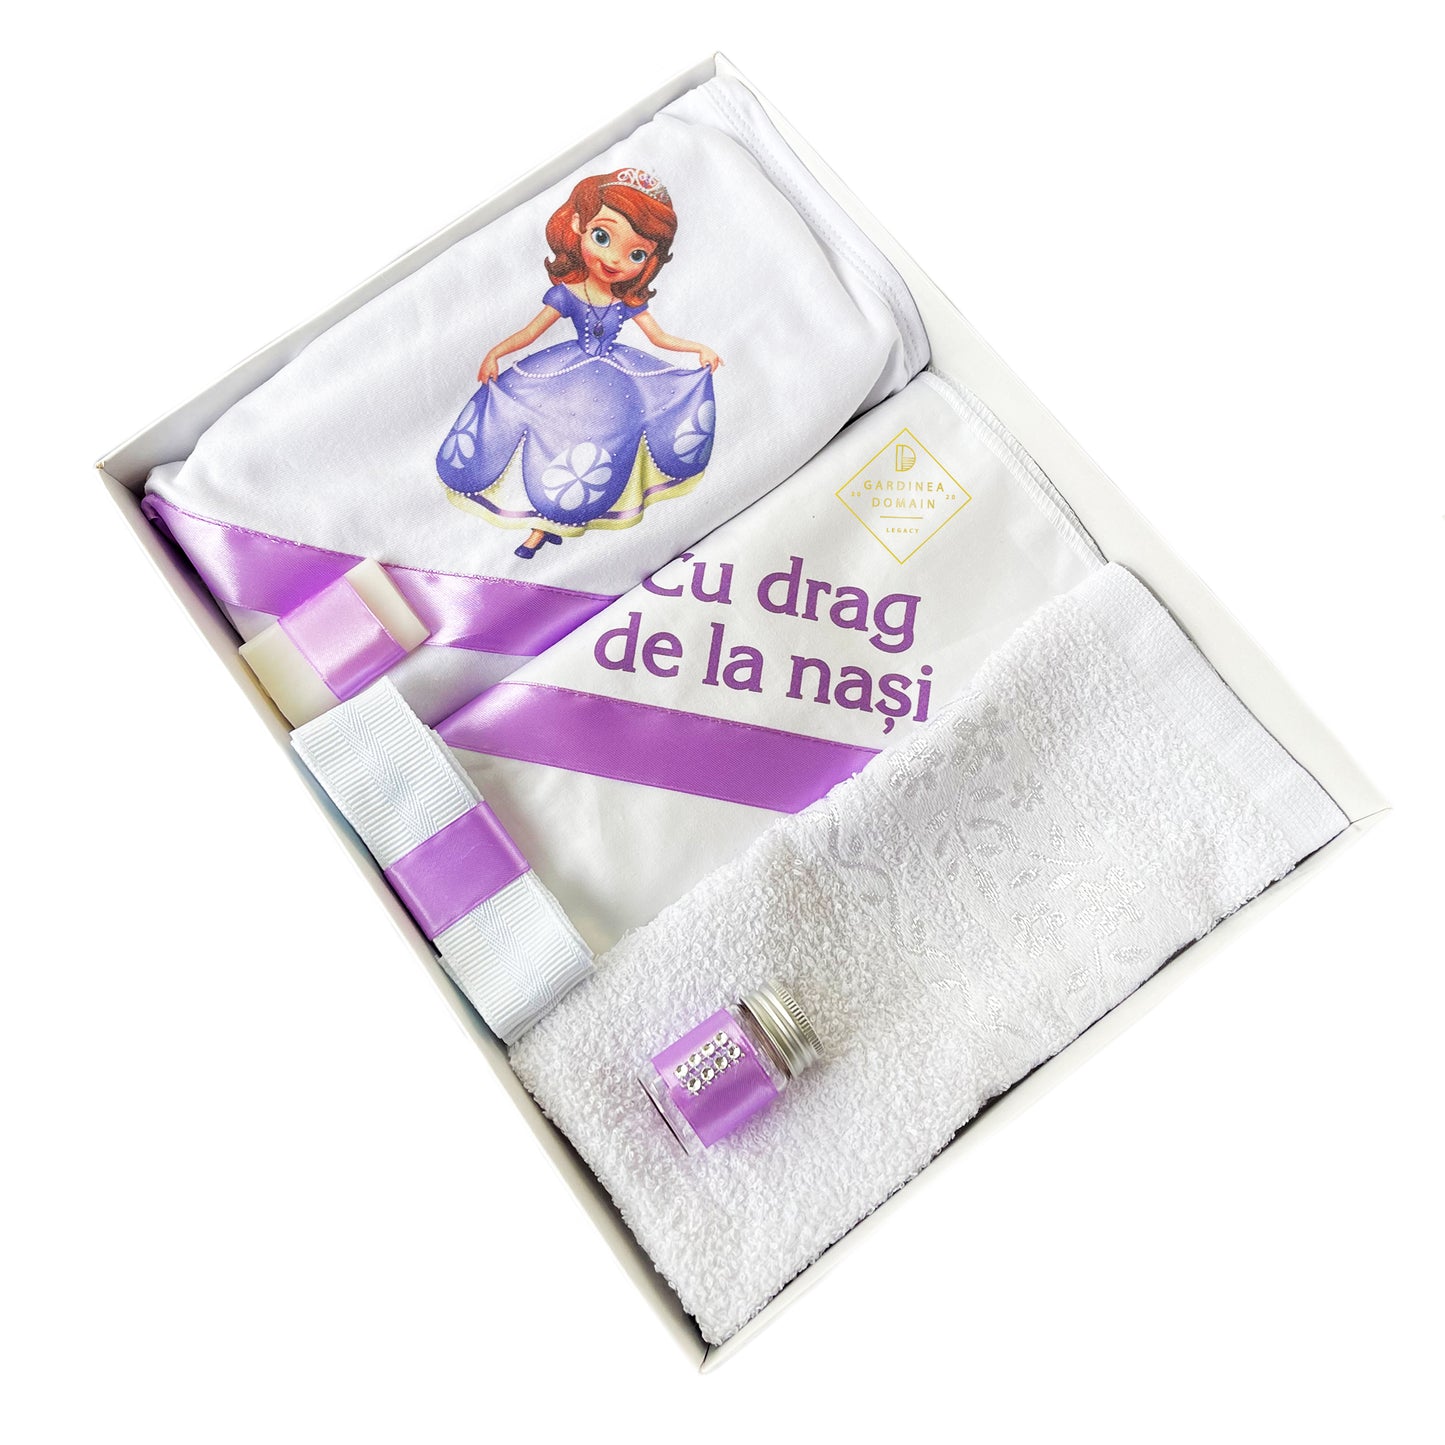 Trusou Printesa Sofia botez Gardinea Domain® 6 piese, in cutie cadou, bumbac 100%, personalizat cu mesajul "Cu drag de la nasi!" mov